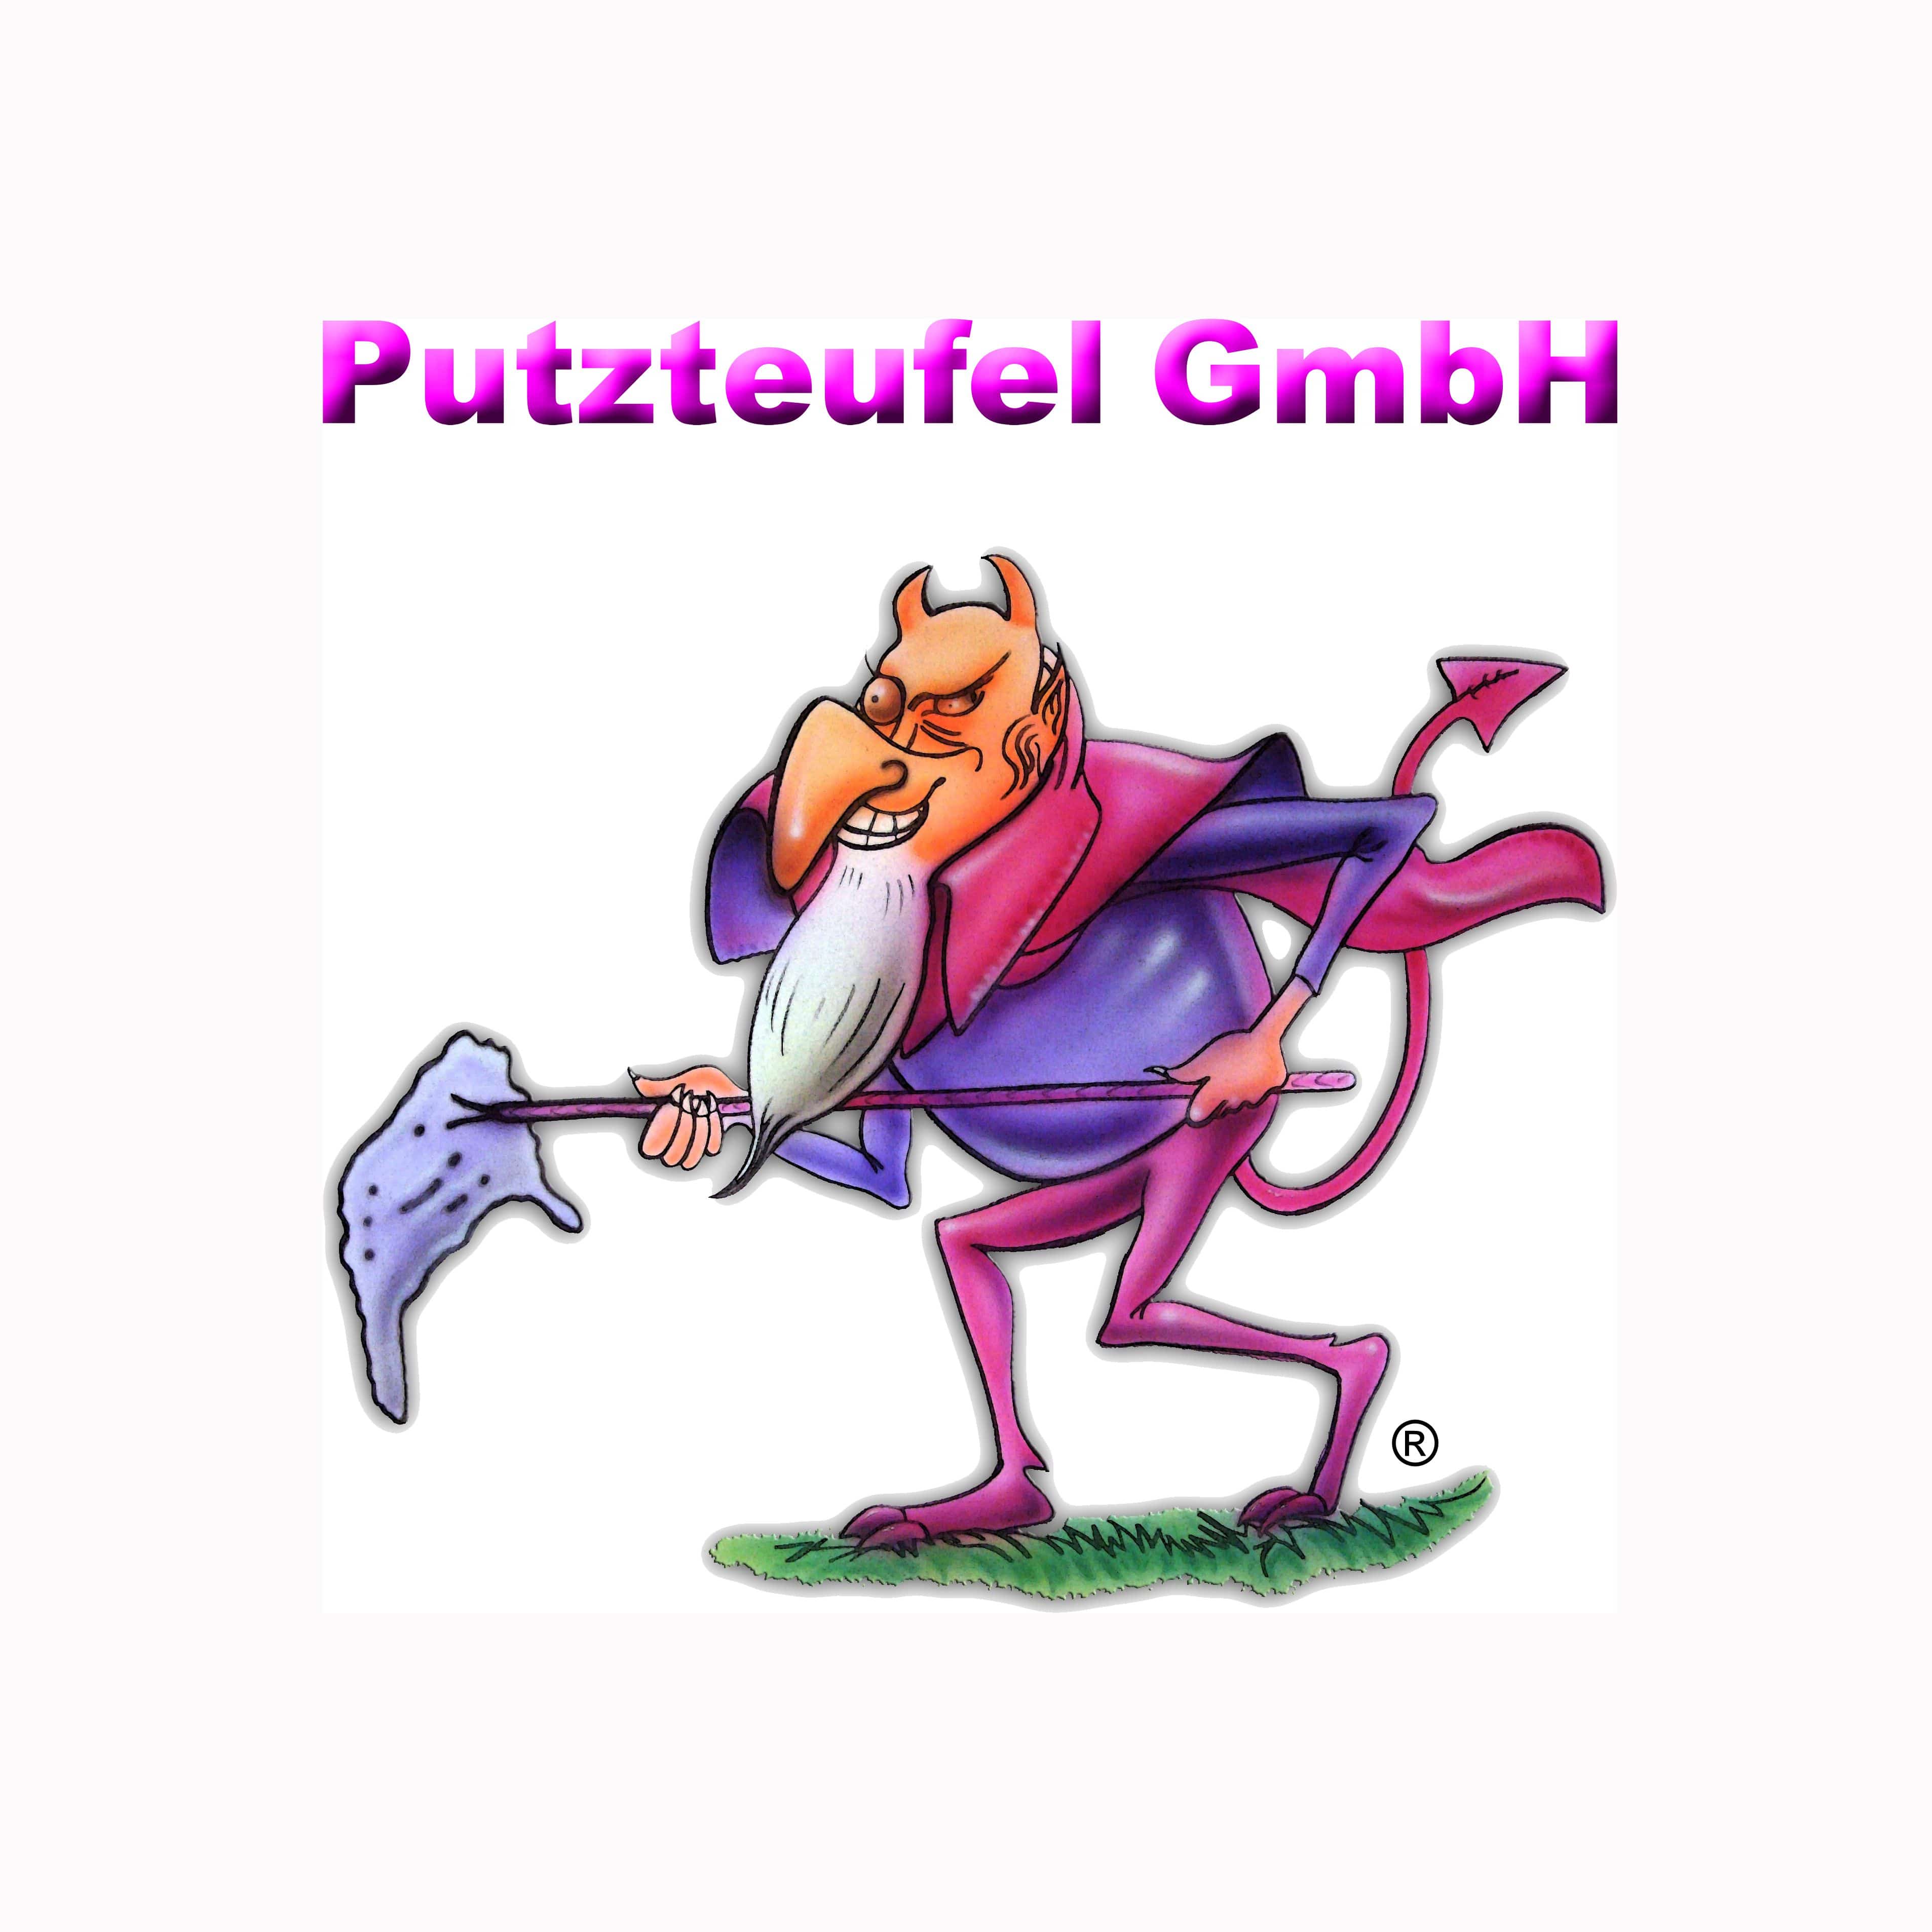 Putzteufel GmbH